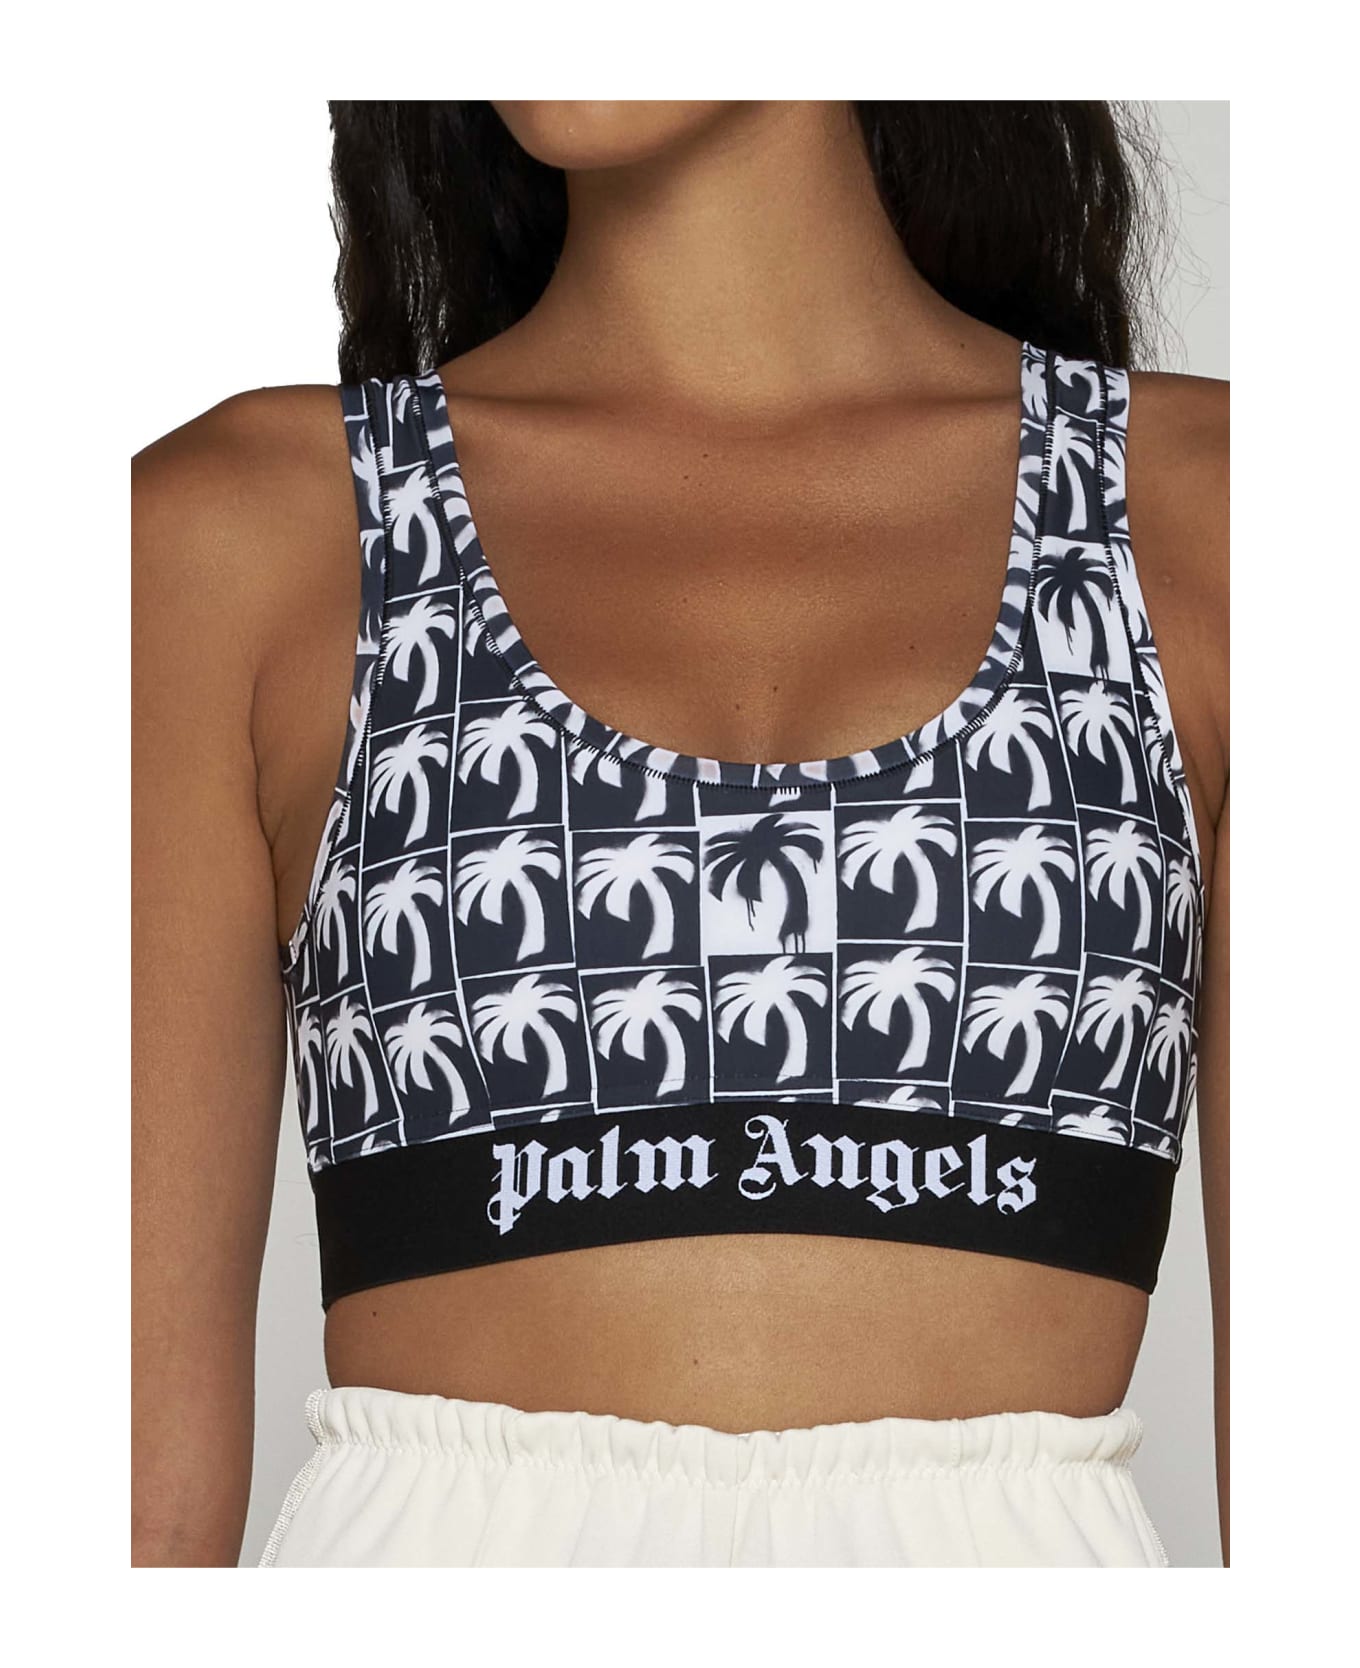 Palm Angels Palms Logo Bra Top - Black white